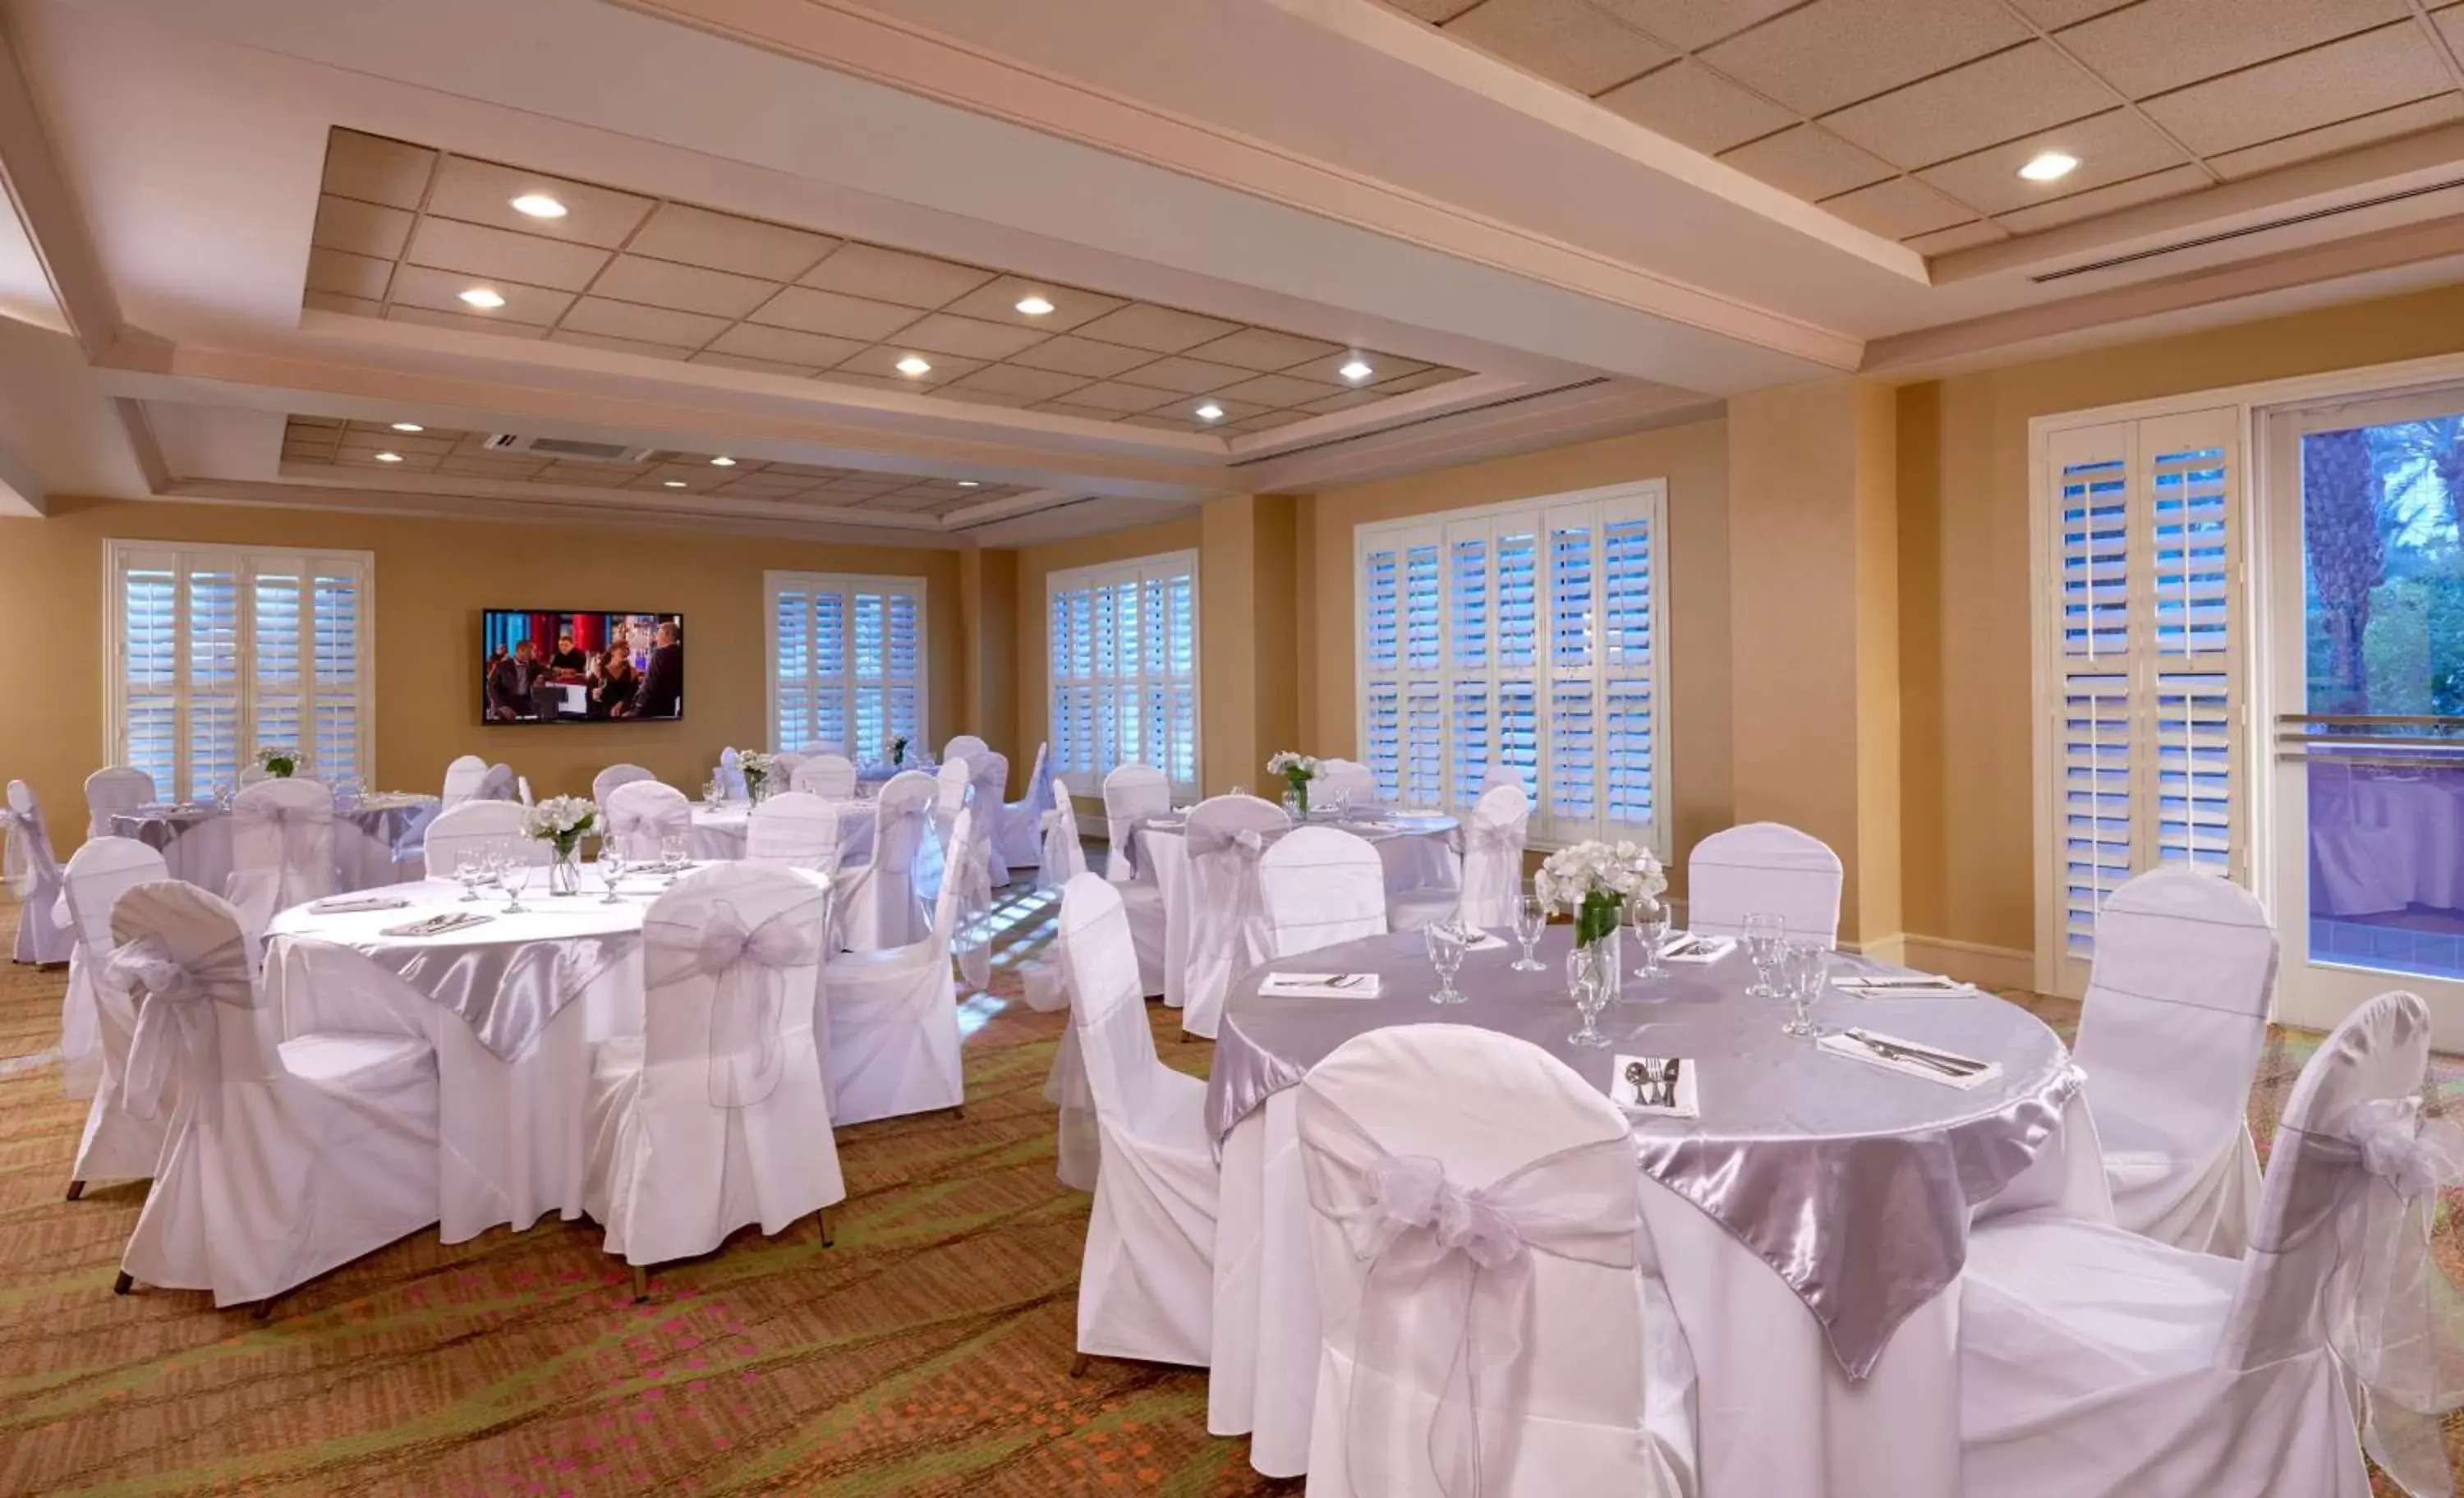 Meeting/conference room, Banquet Facilities in Hilton Grand Vacations Club Flamingo Las Vegas